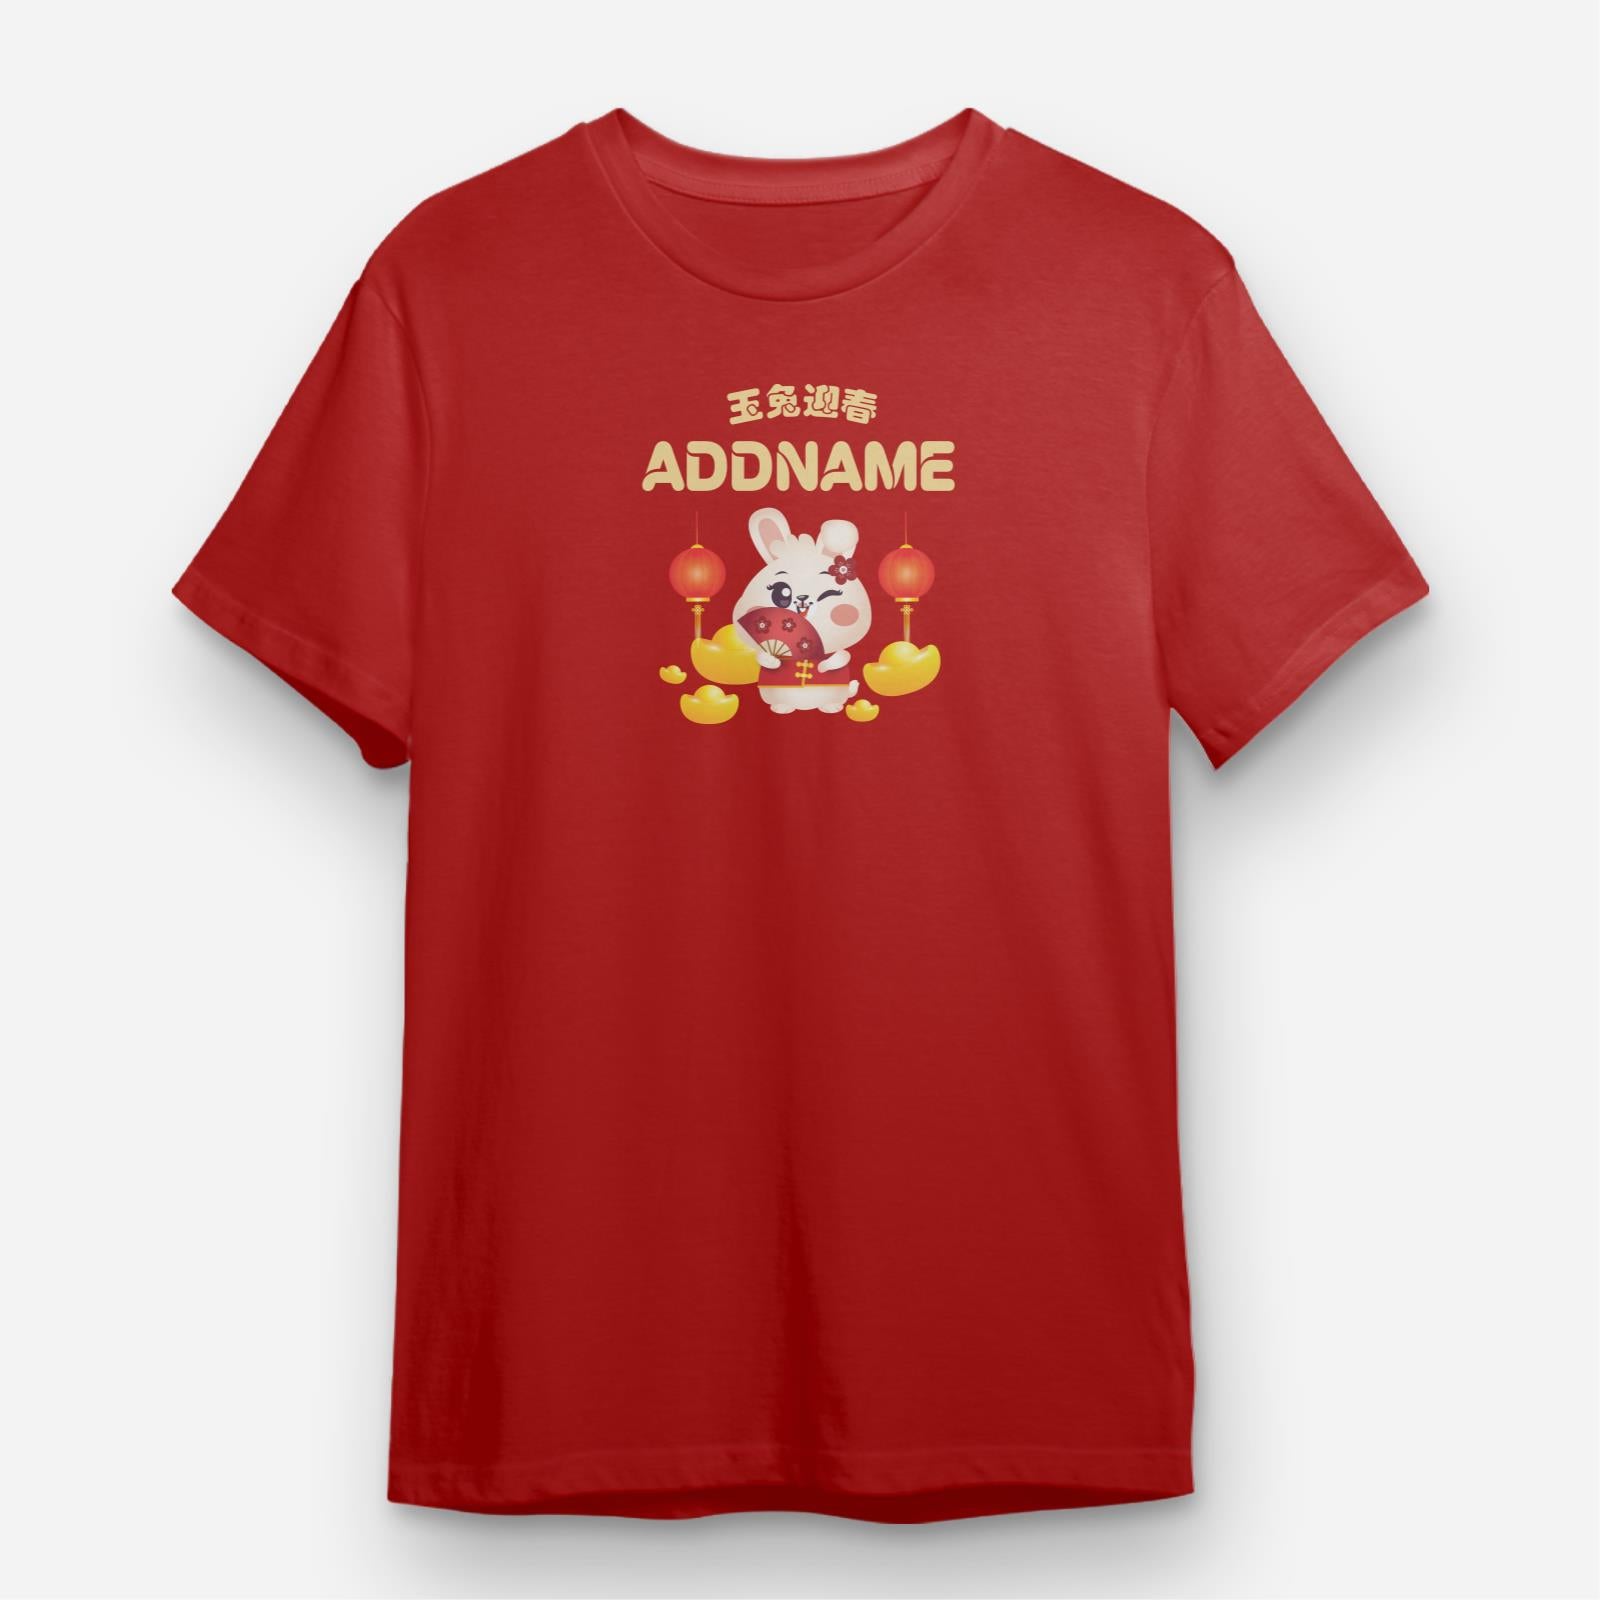 Cny Rabbit Family - Mommy Rabbit Unisex Tee Shirt with English Personalization